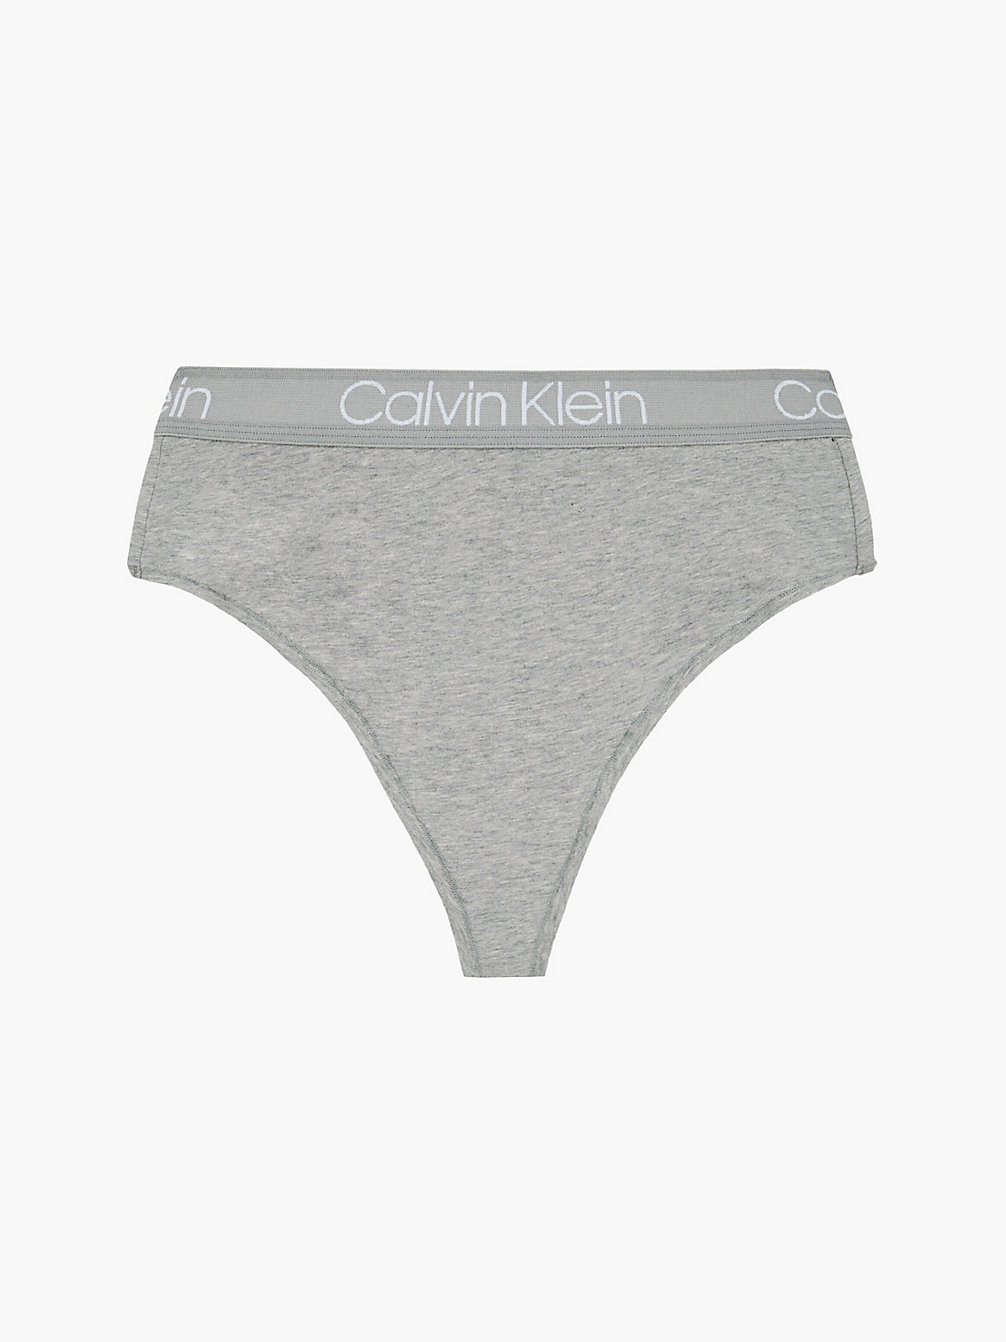 GREY HEATHER High Waisted Thong - Body undefined women Calvin Klein